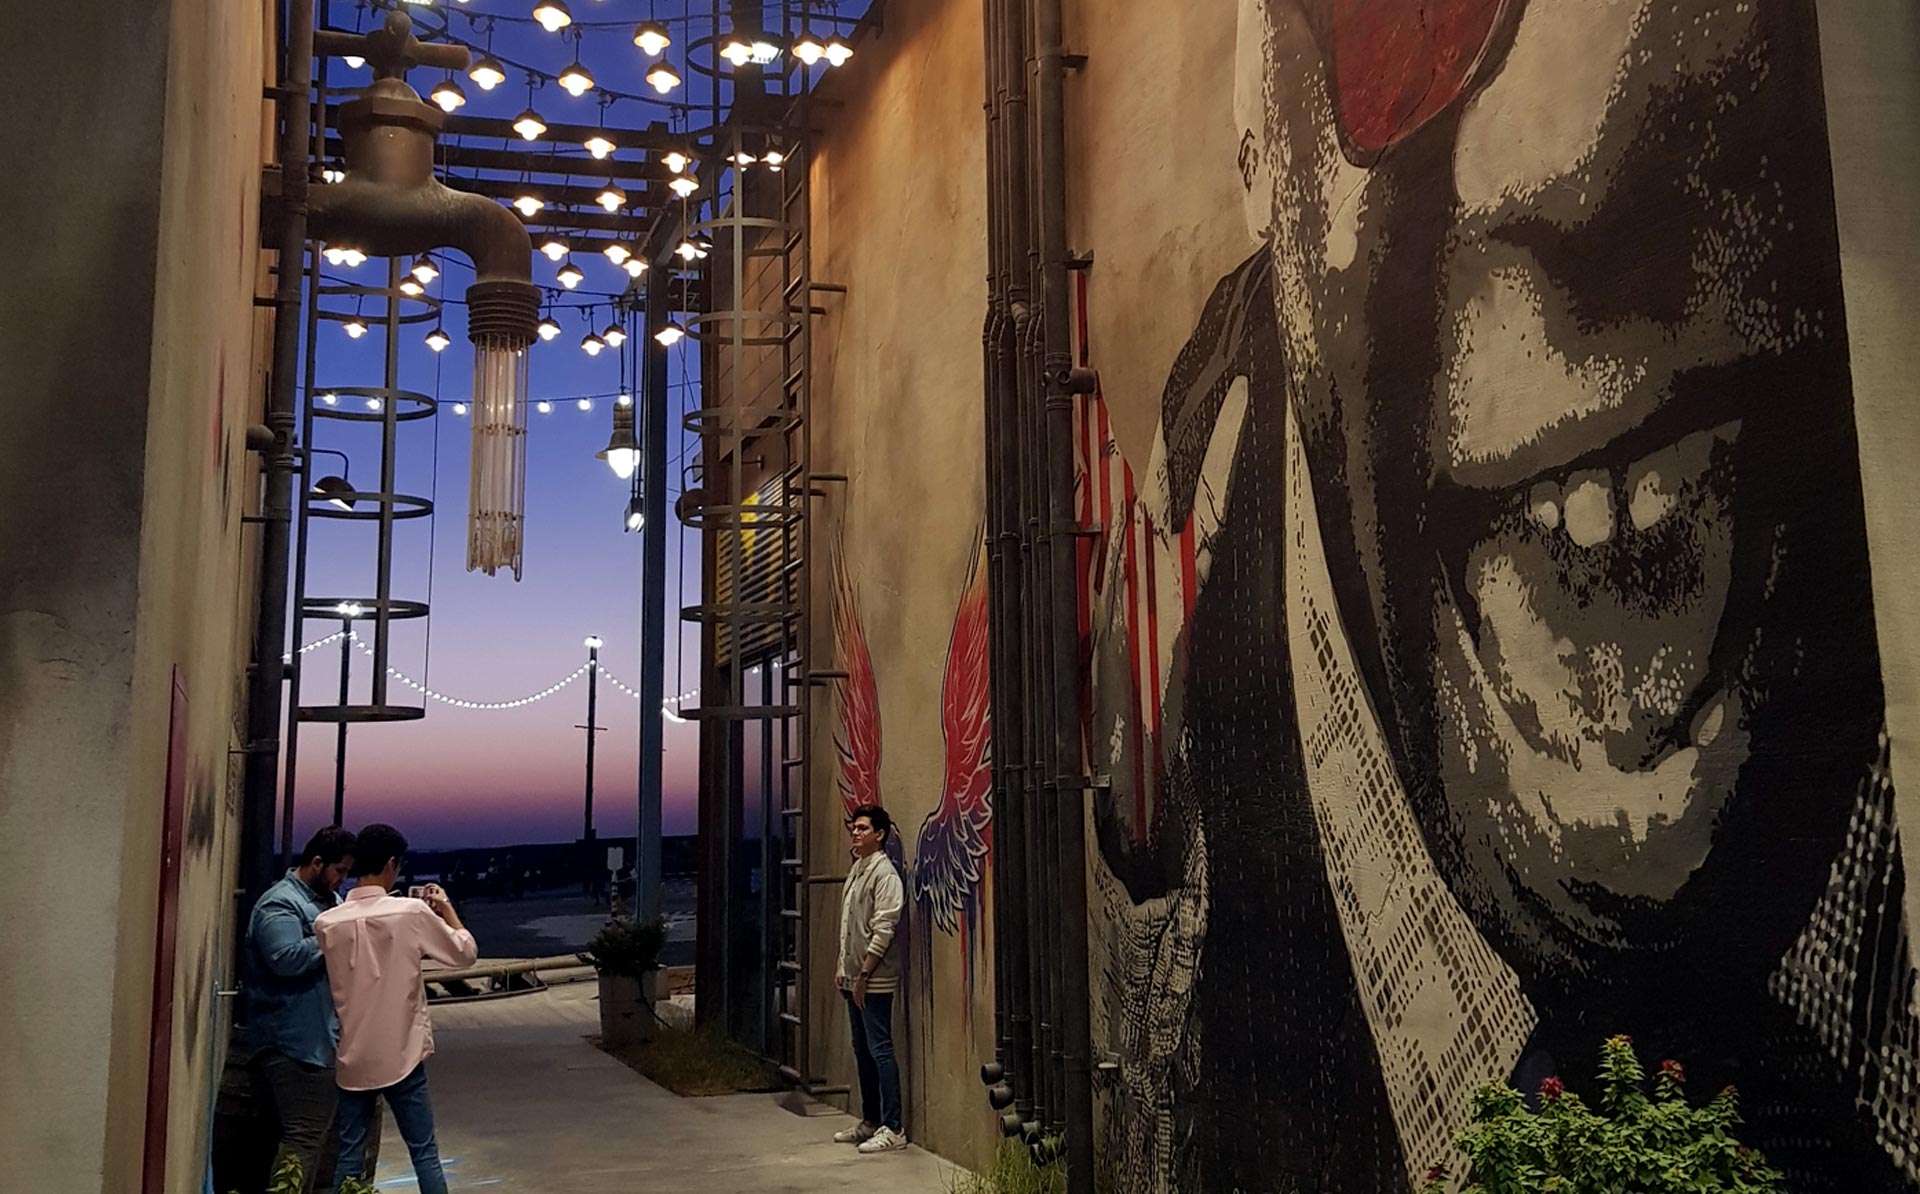 People taking photos at La Mer, Dubai at sunset with graffiti art on the wall.